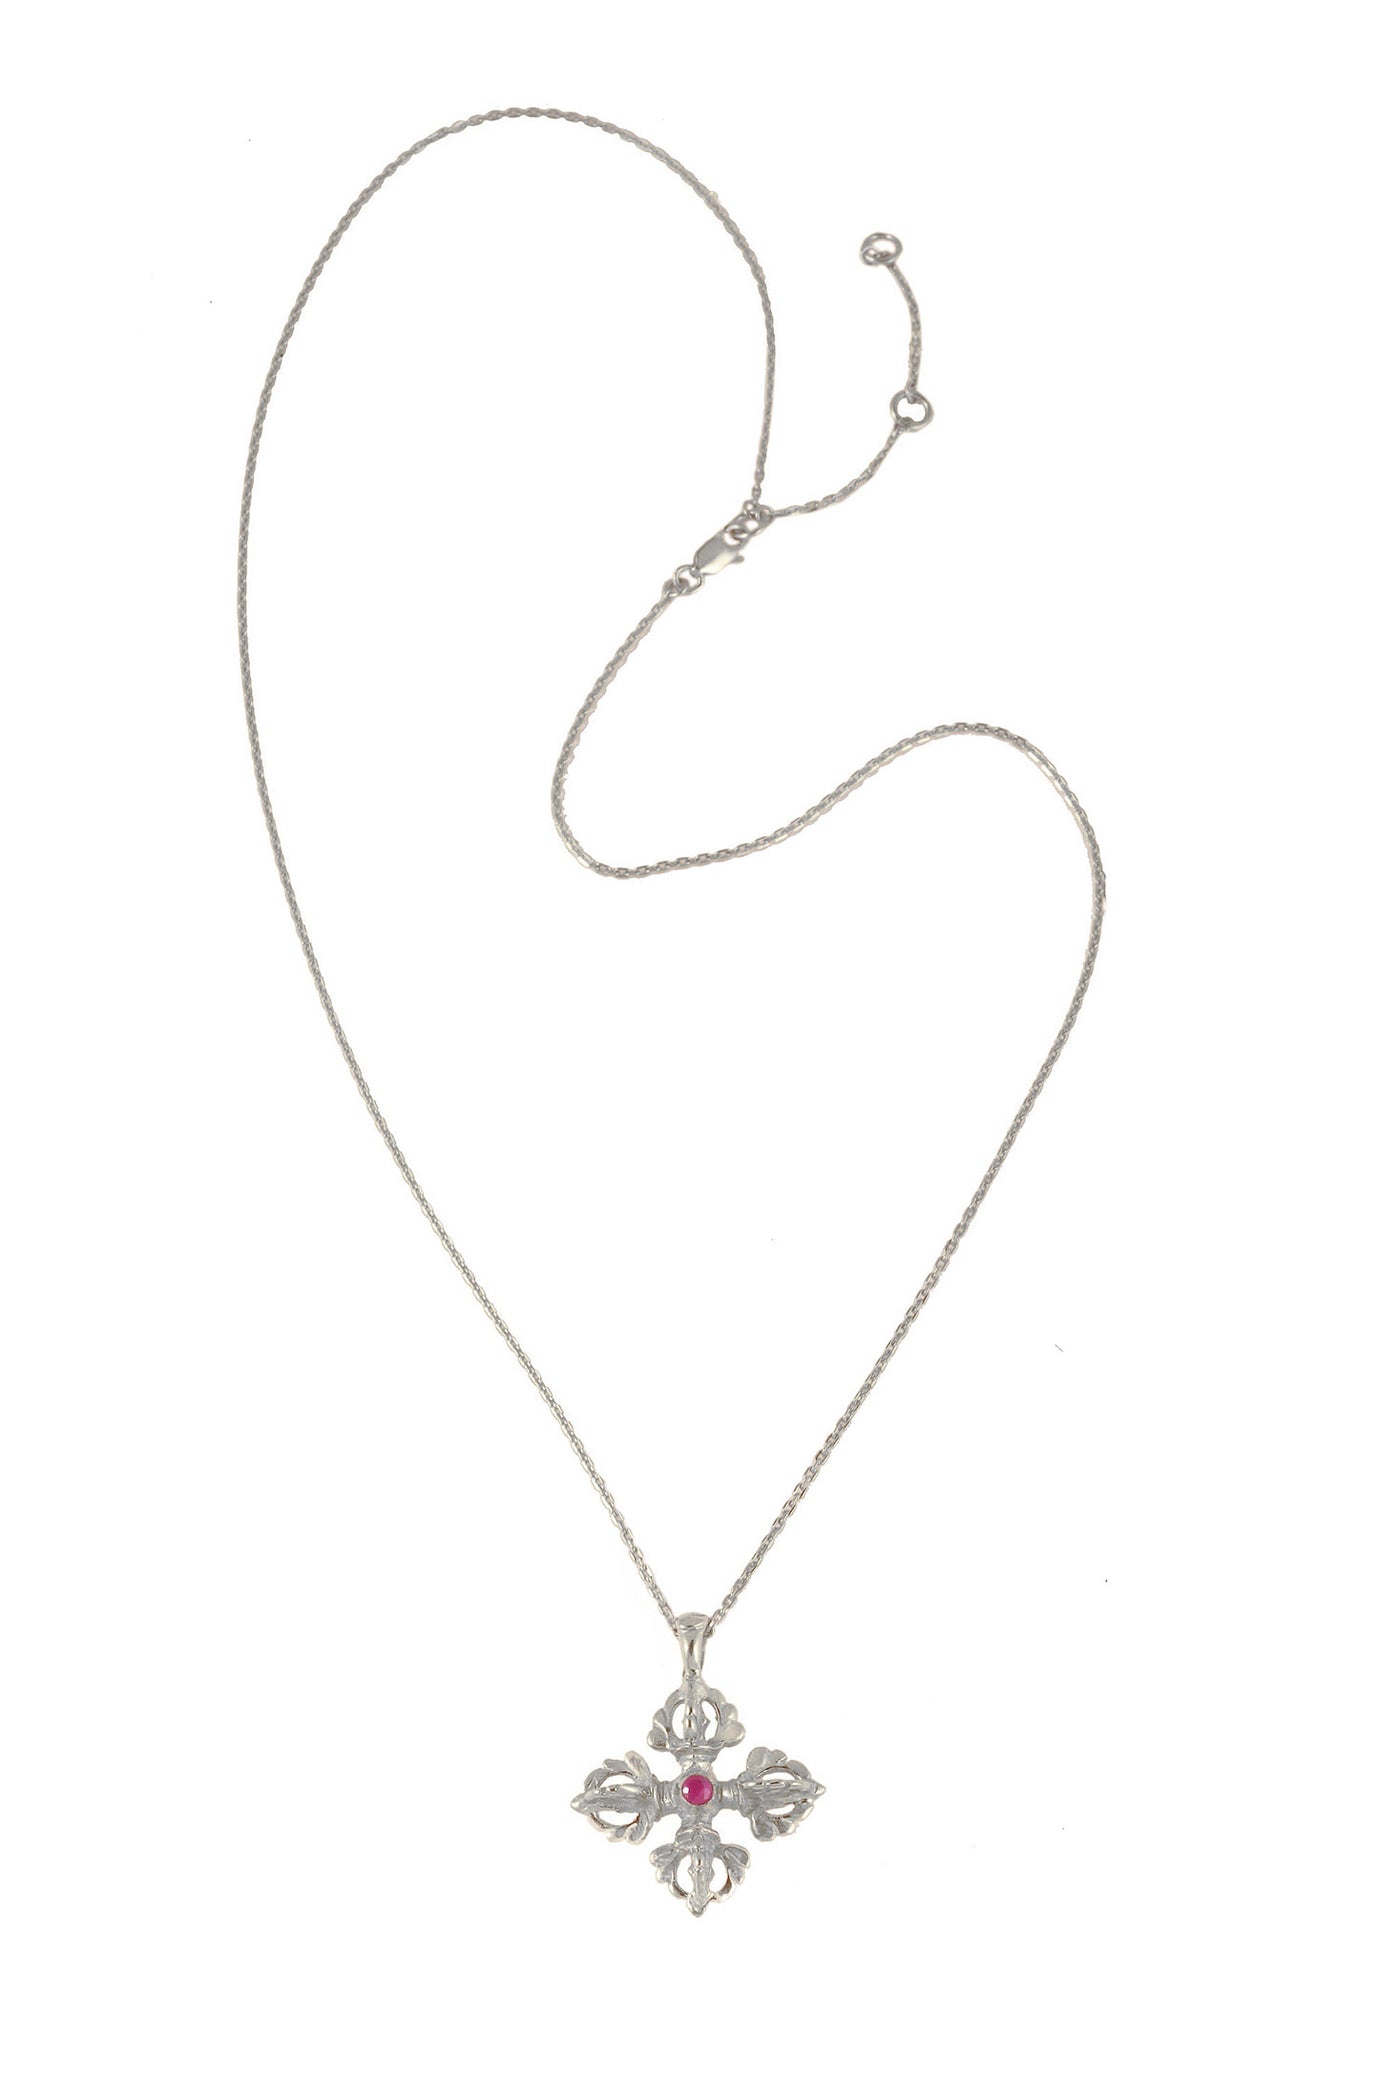 Chain necklace "Vajra" 73 cm ruby stone. Silver